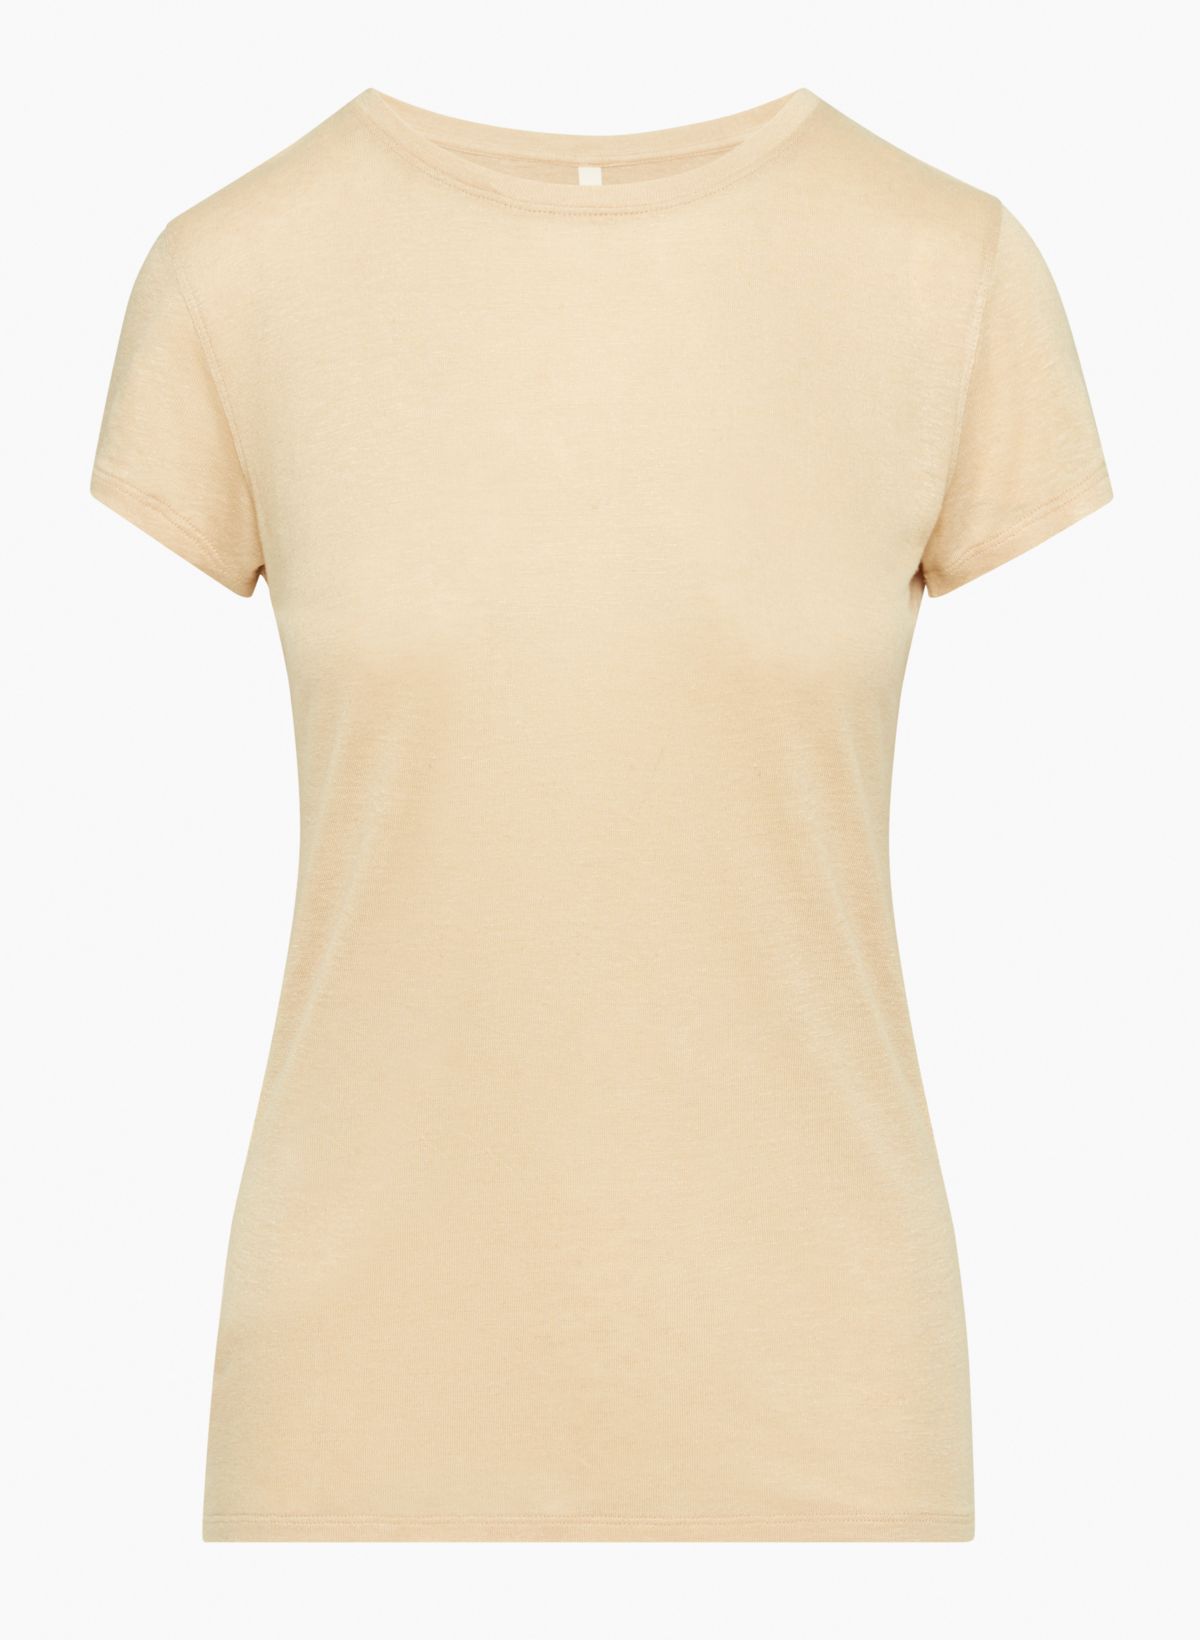 Women's Premium Cotton Basic T-Shirt Crew Neck Short Sleeve Plain Solids  Fitted - AbuMaizar Dental Roots Clinic